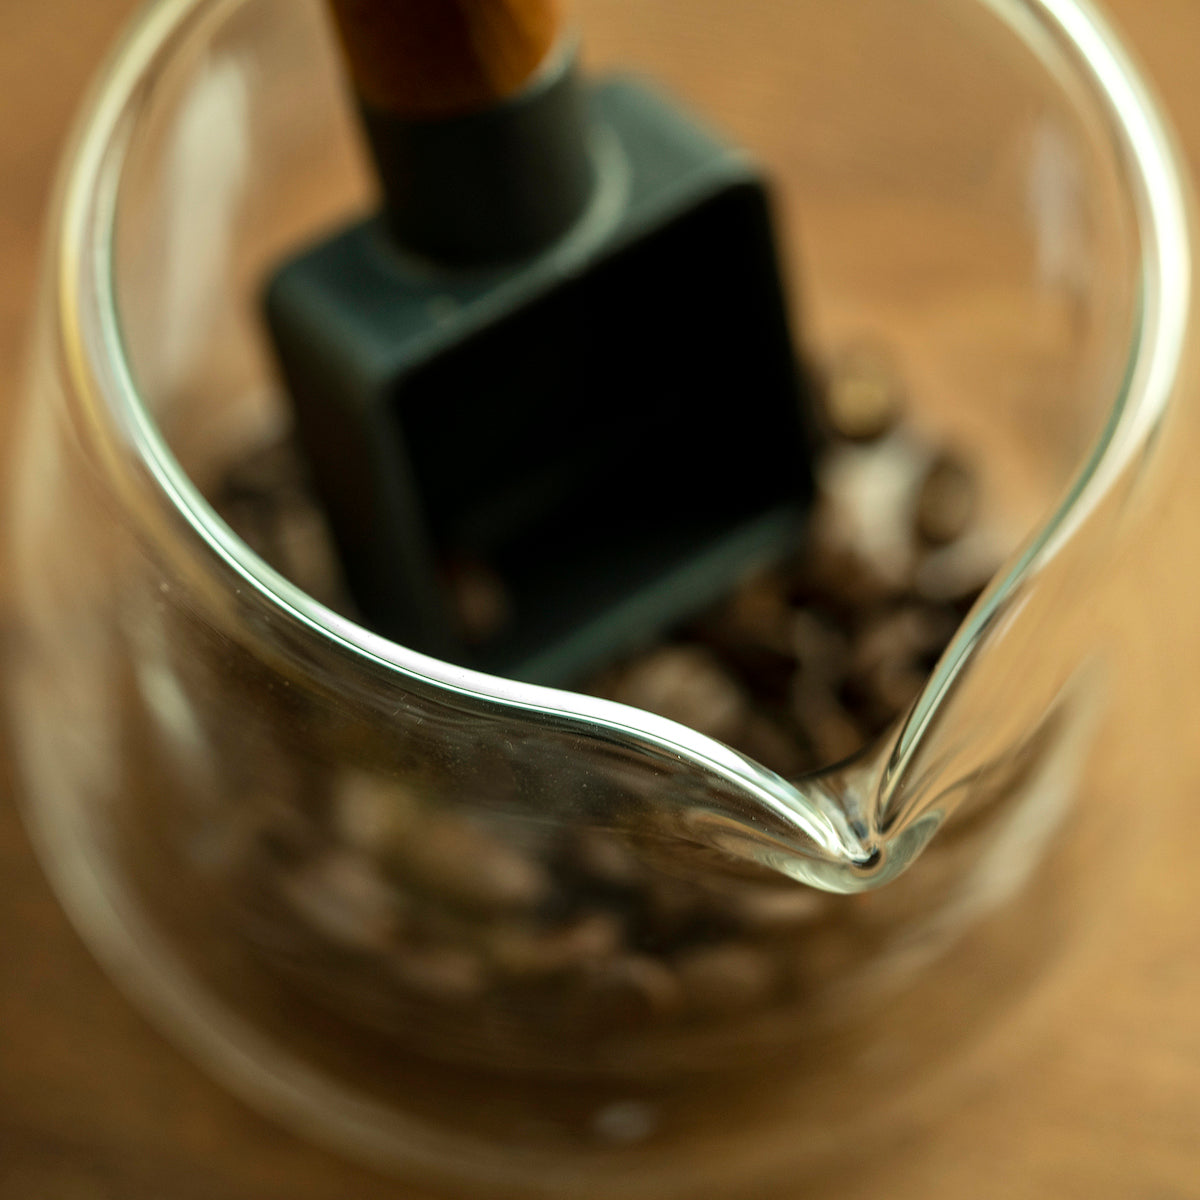 HMM Gaze Dripper & Pot lifestyle 12 | THE COFFEE GOODS